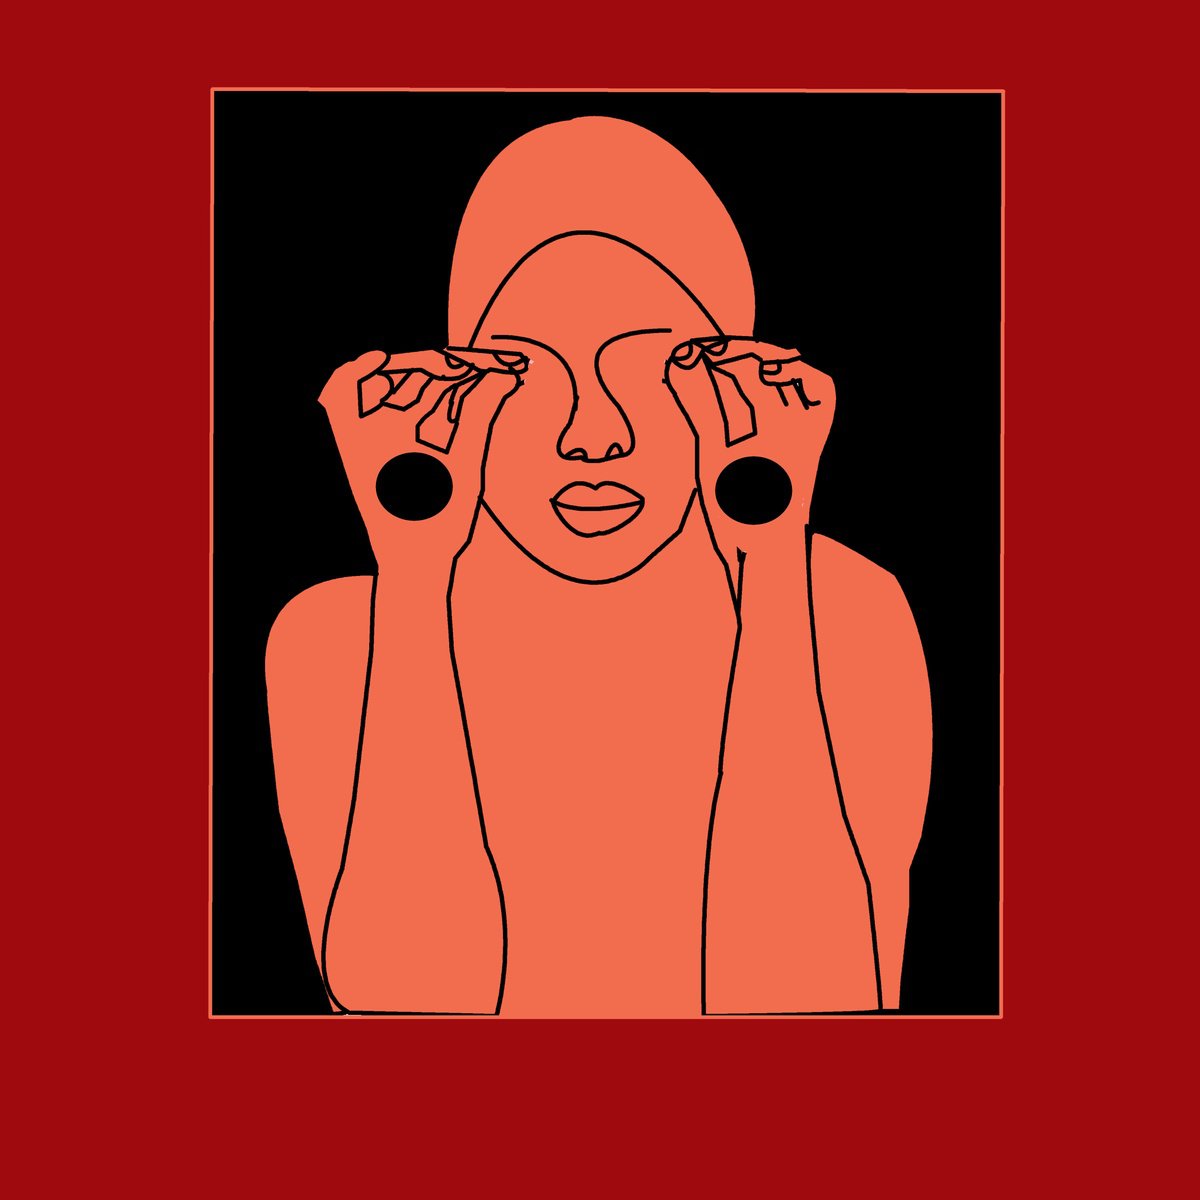 Eyes Wide Shut - Feminist art by Rina Mualem - Pop art